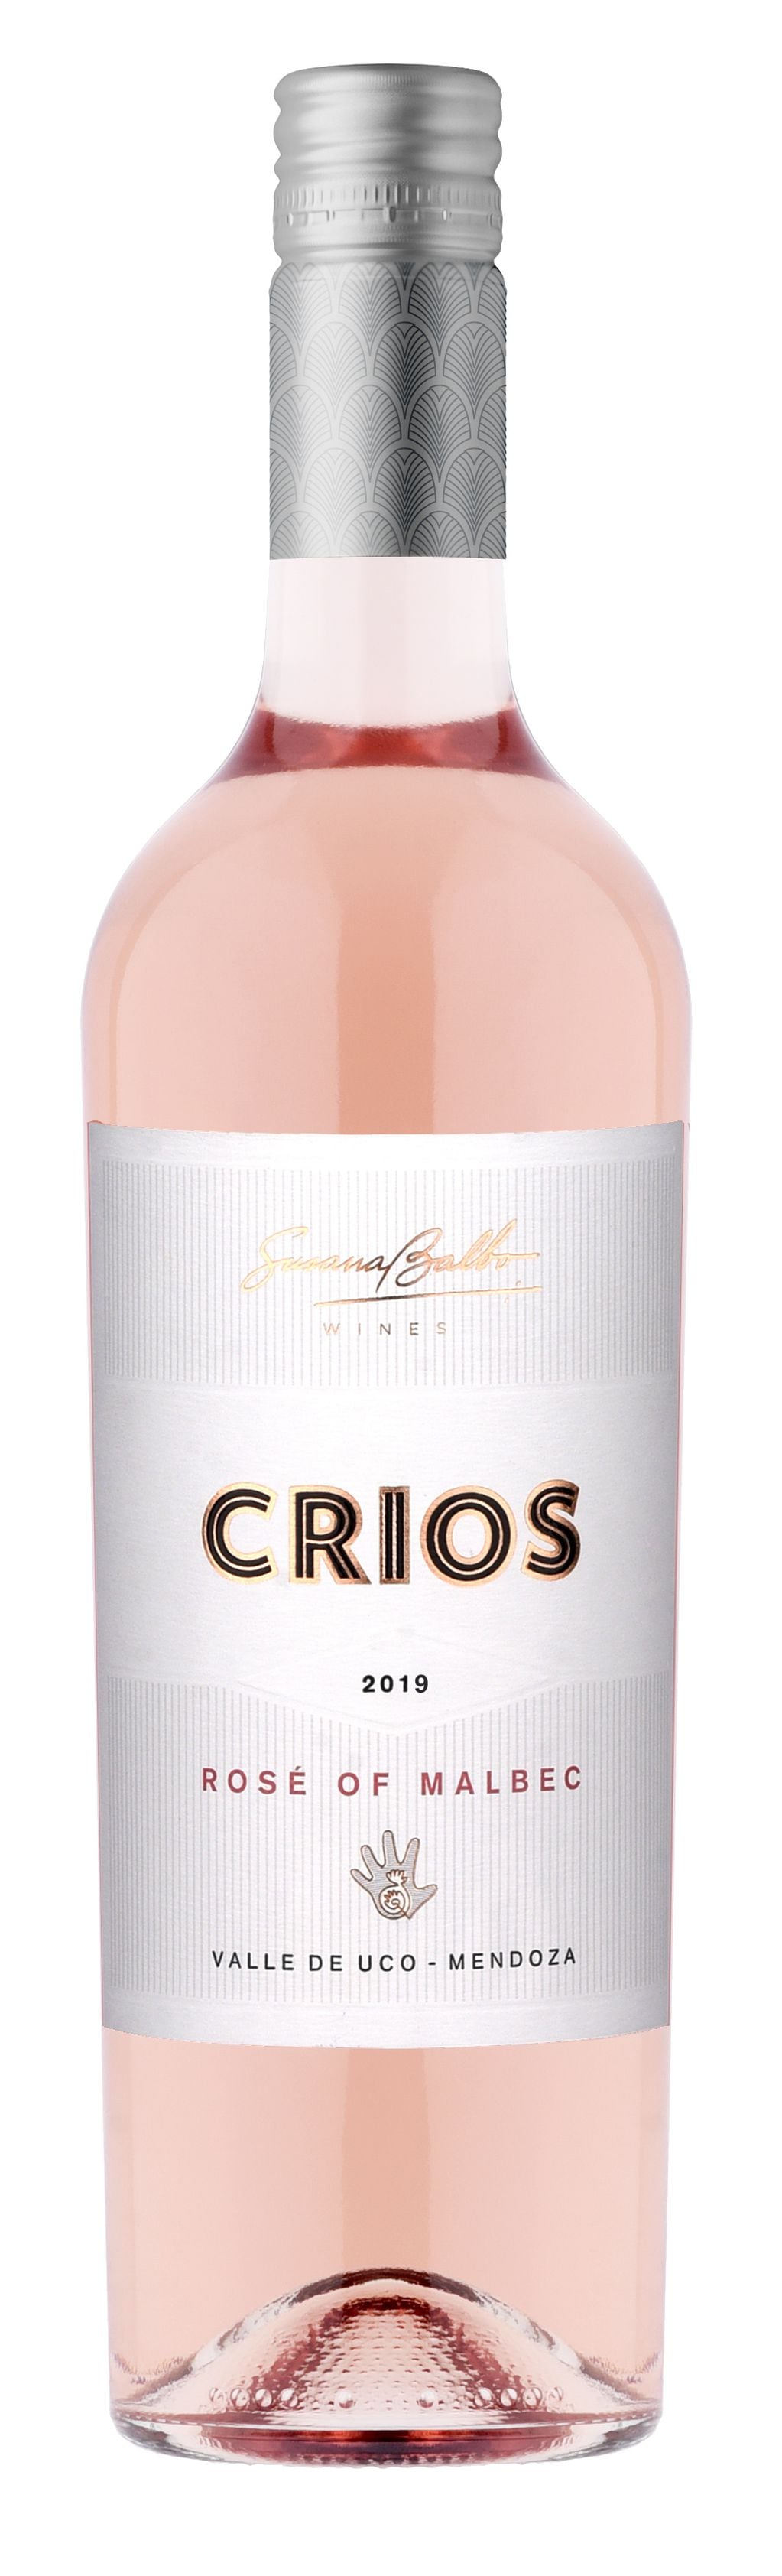 CRIOS Rosé de Malbec 2019.